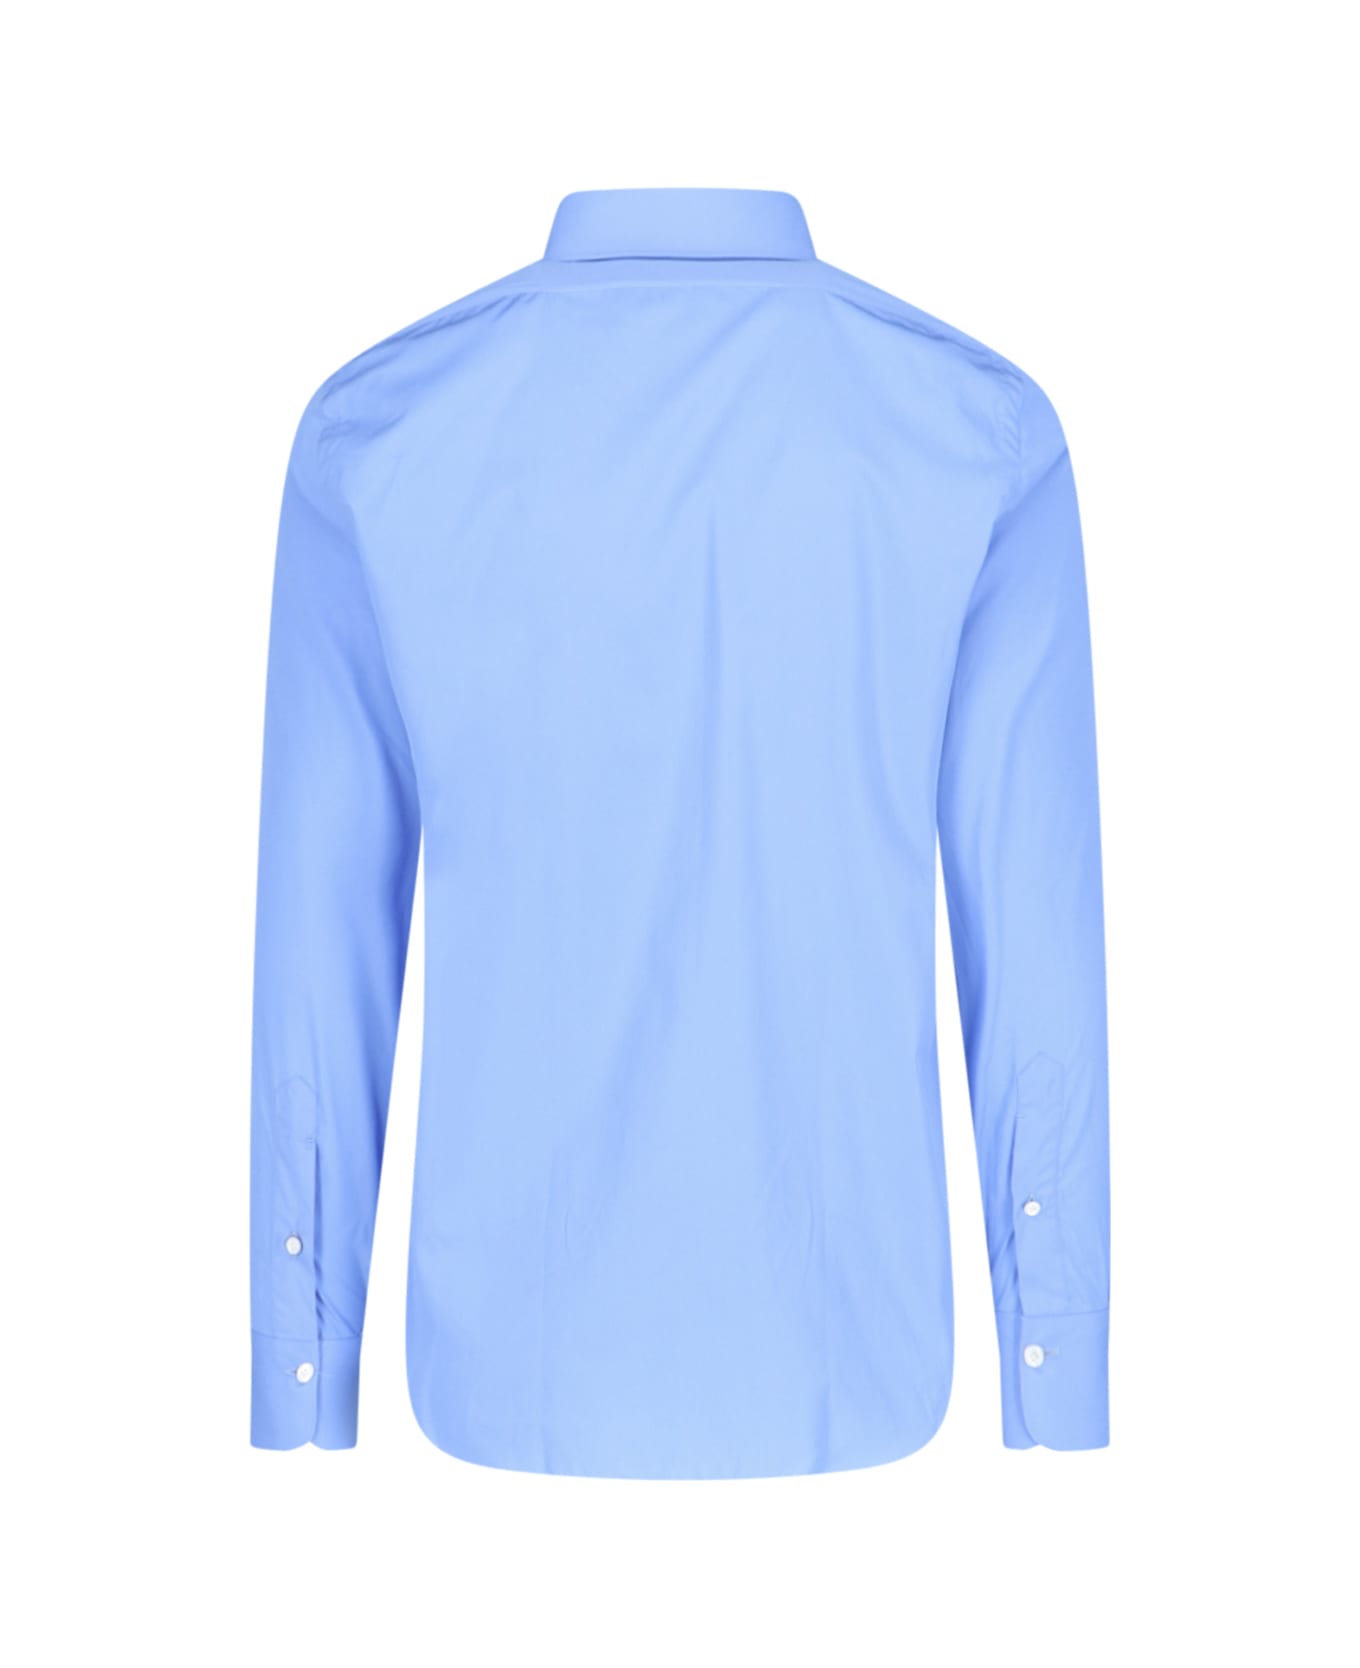 Finamore Slim Shirt - Light Blue シャツ